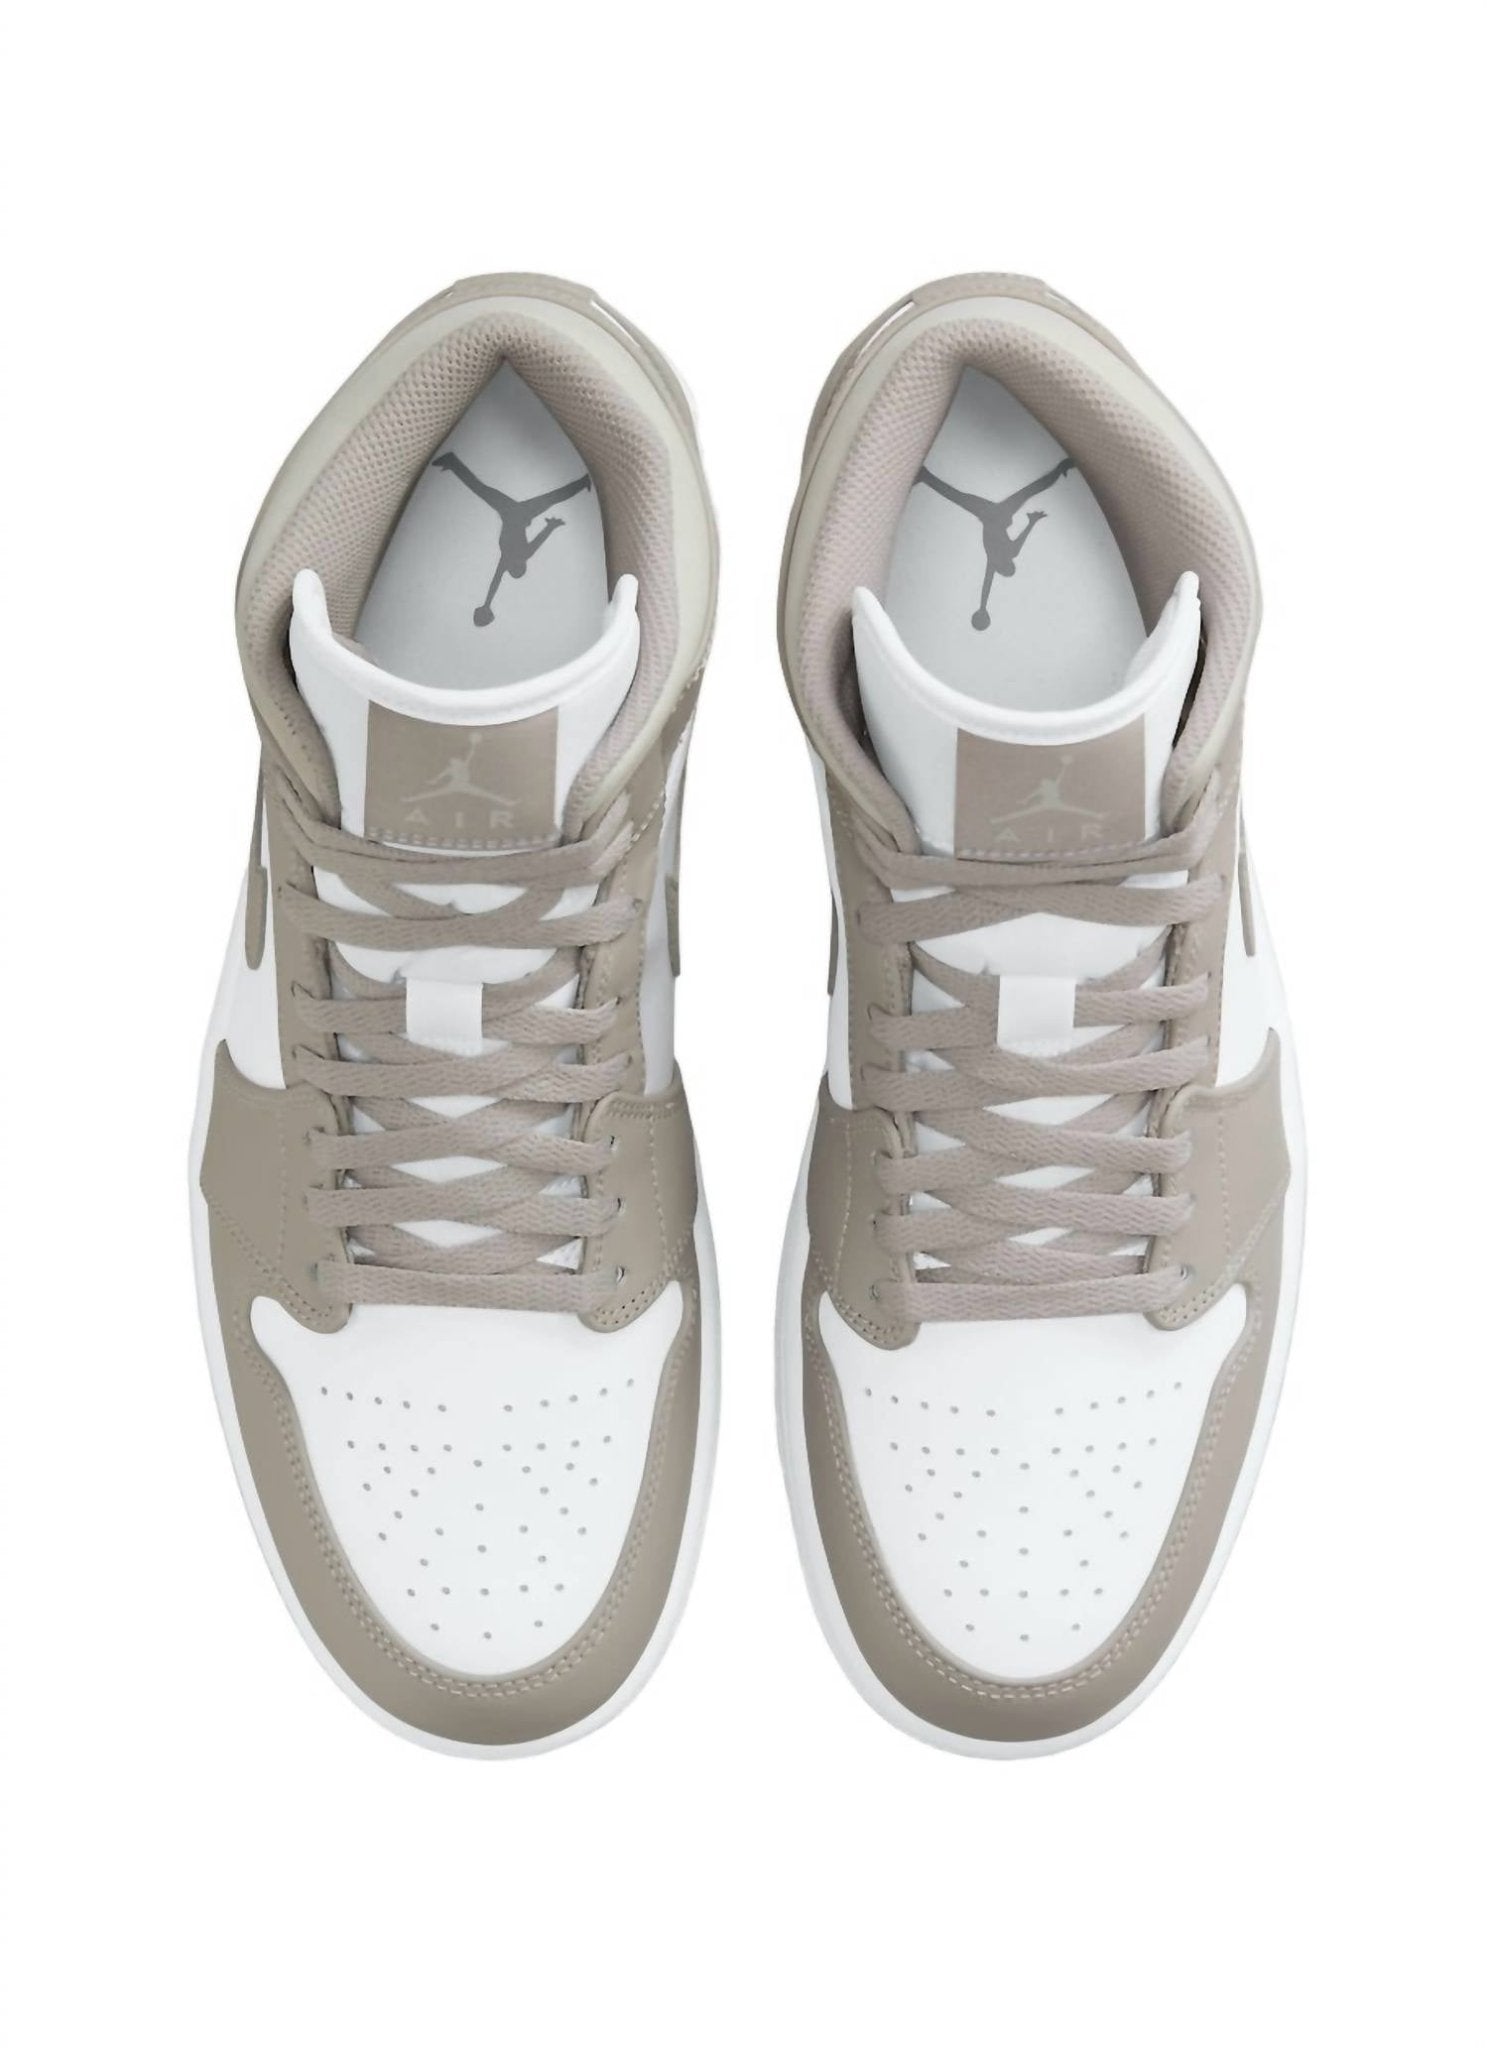 Men'S Air Jordan 1 Mid Sneaker in College Grey/White Light Bone - TJ Outlet